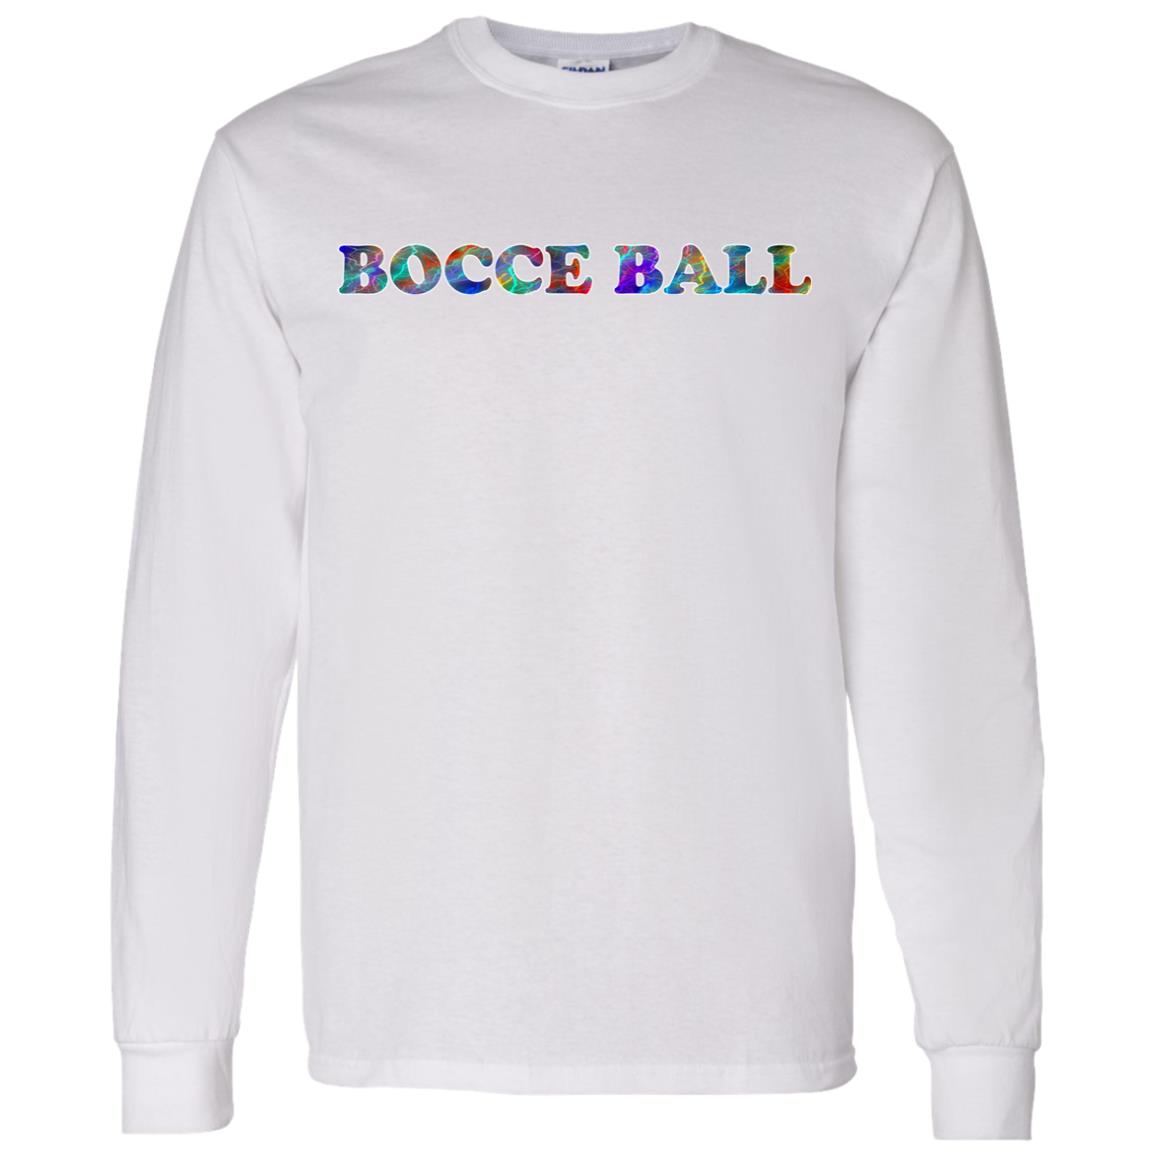 Bocce Ball Long Sleeve T-Shirt